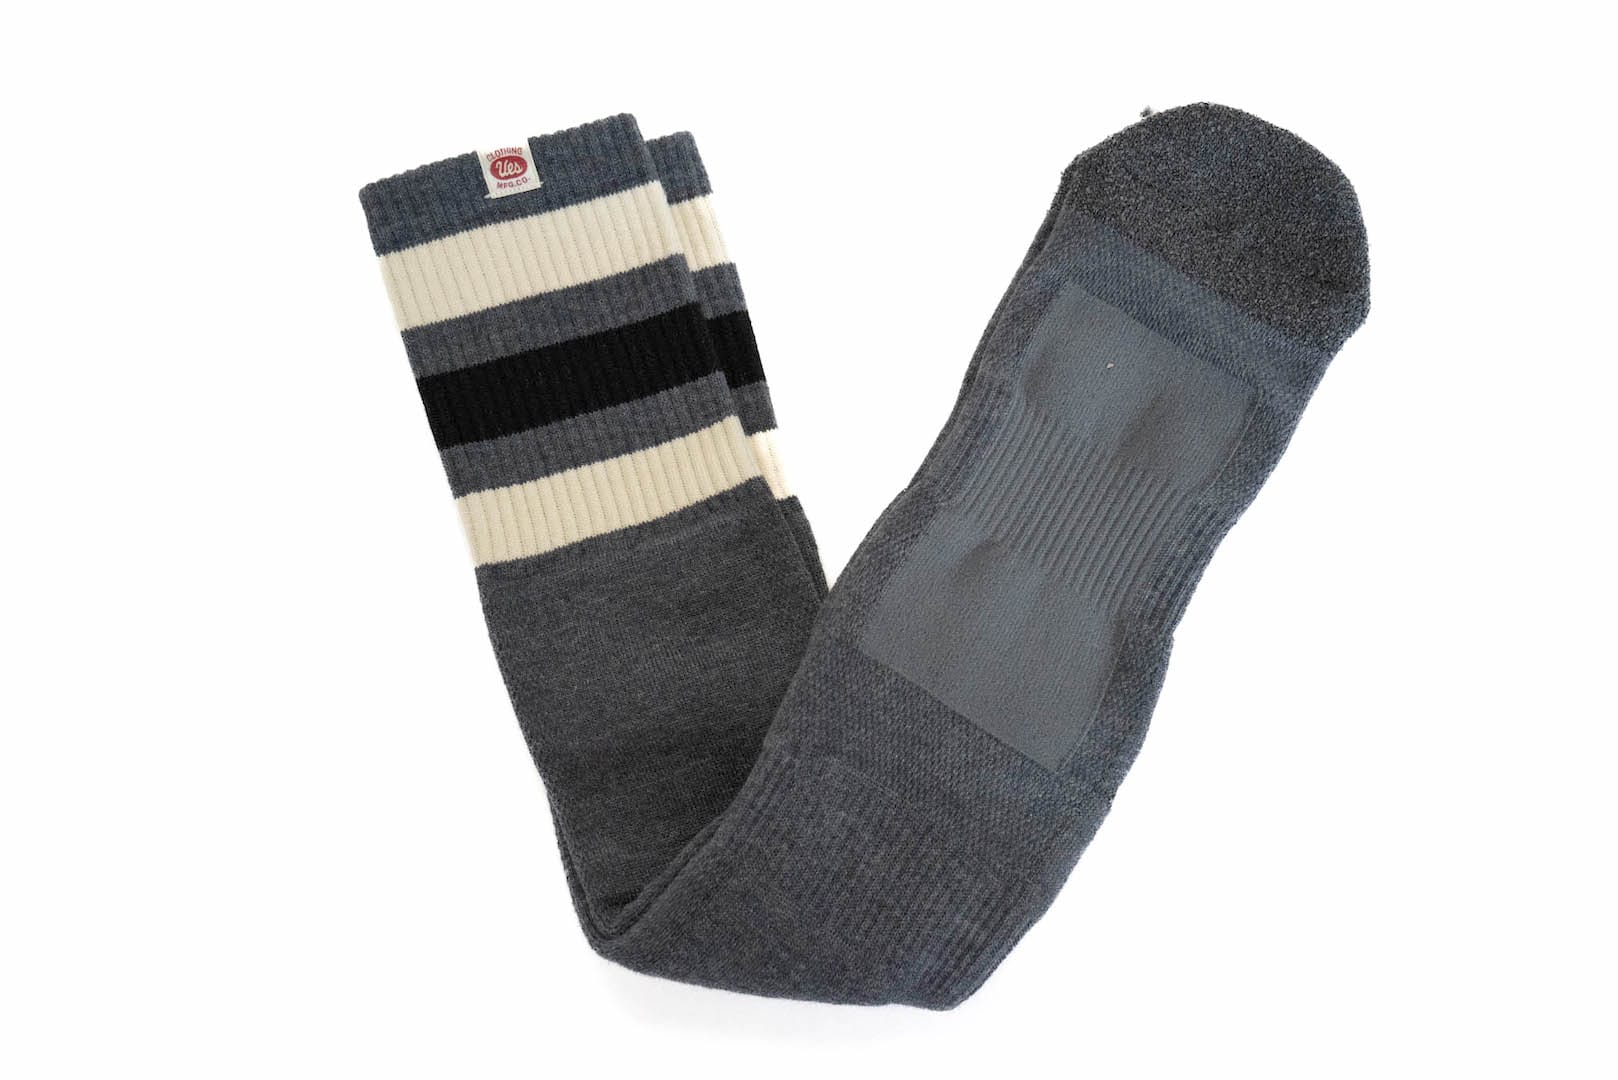 UES 'Ultimate' Boot socks